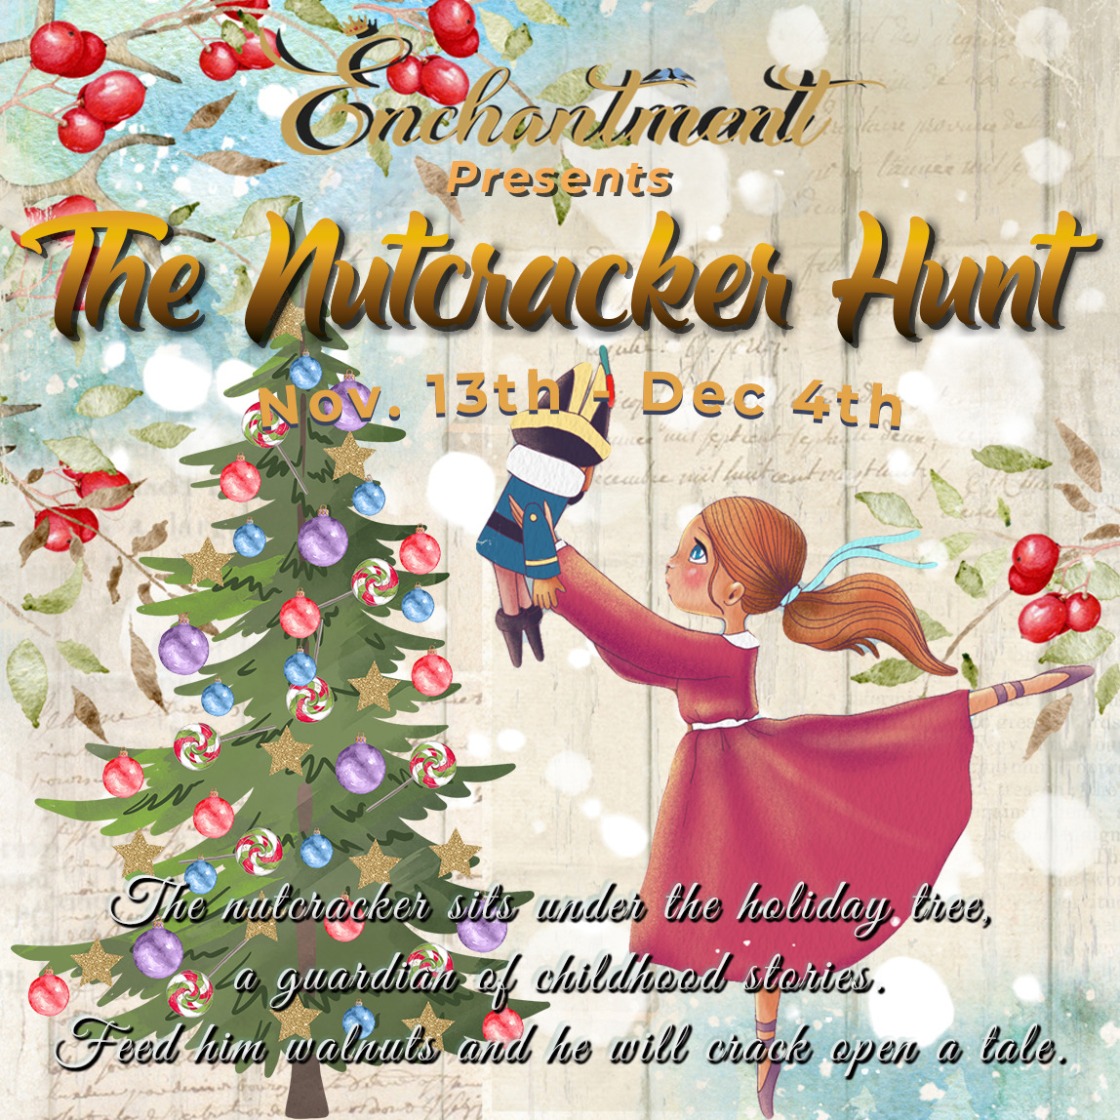 Enchantment Presents: The Nutcracker Hunt